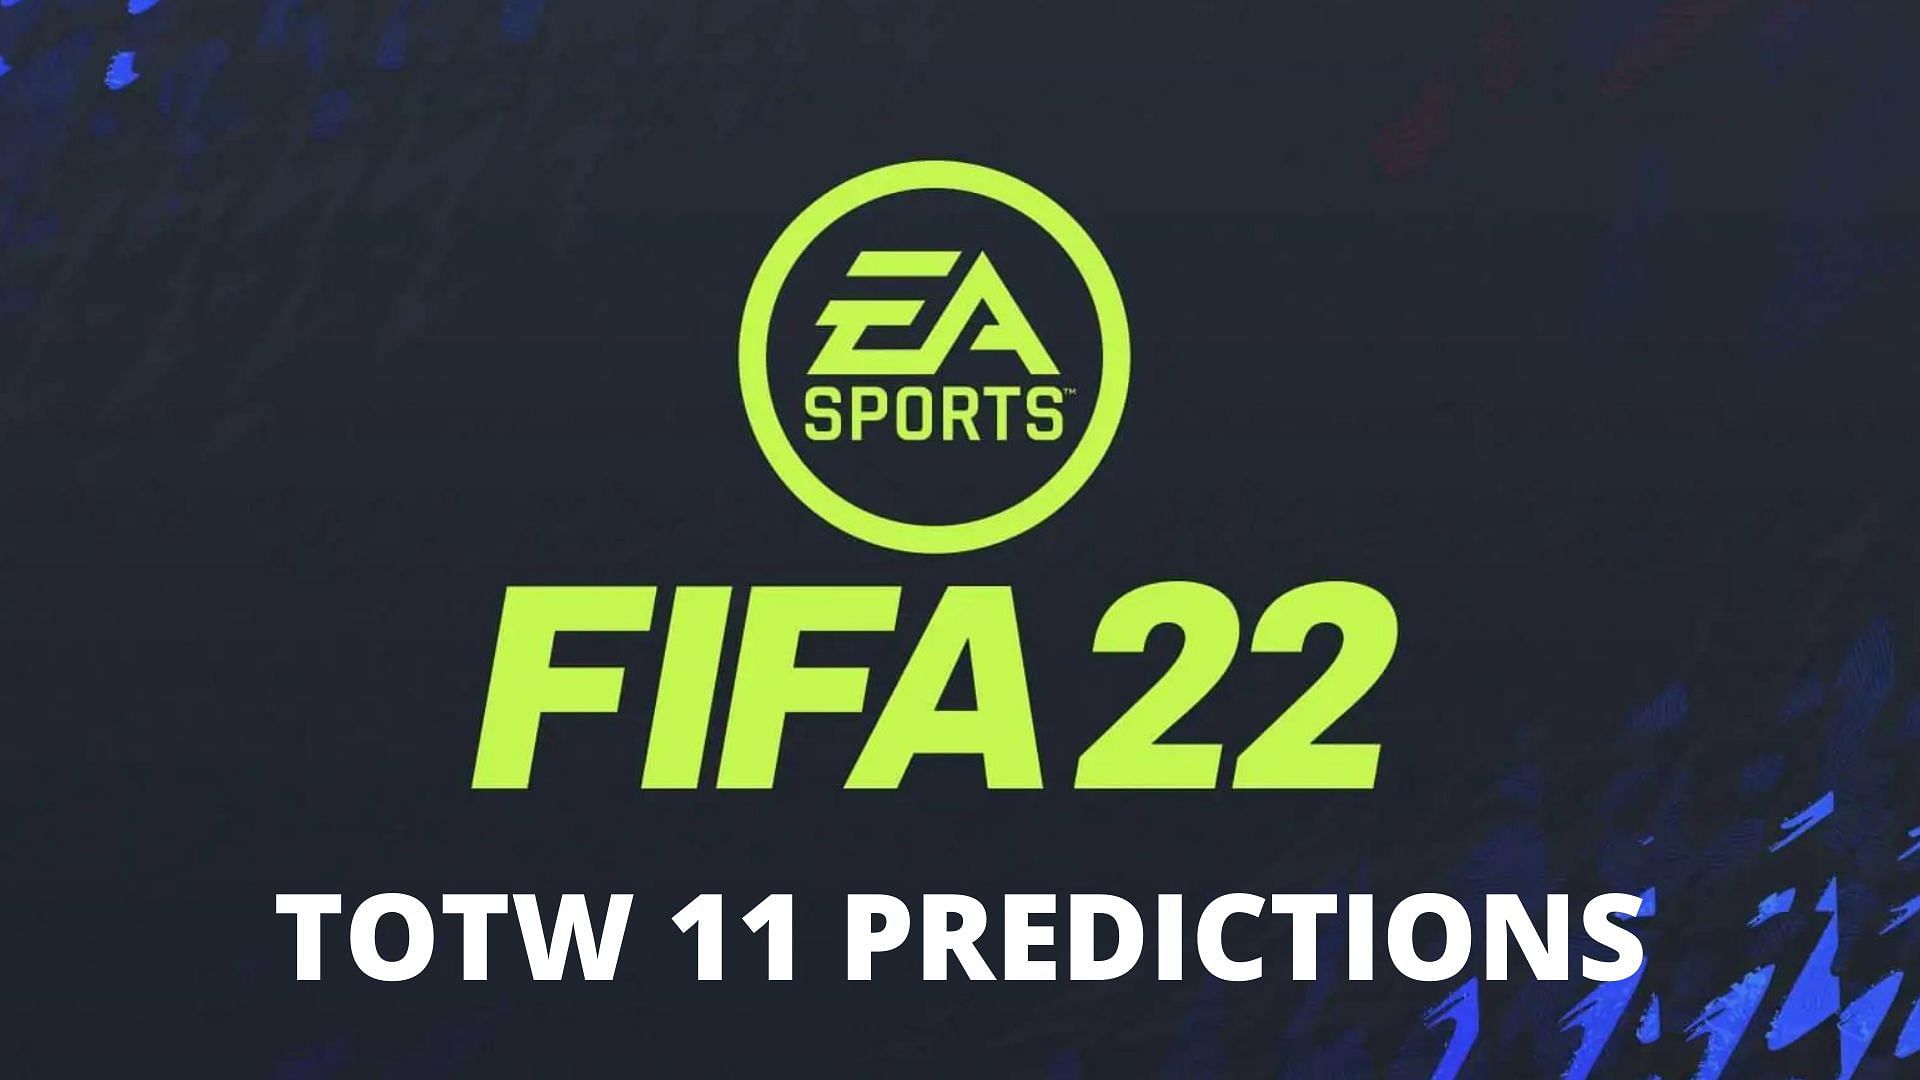 TOTW 11 predictions for the upcoming reveal in FIFA 22 (Image via Sportskeeda)